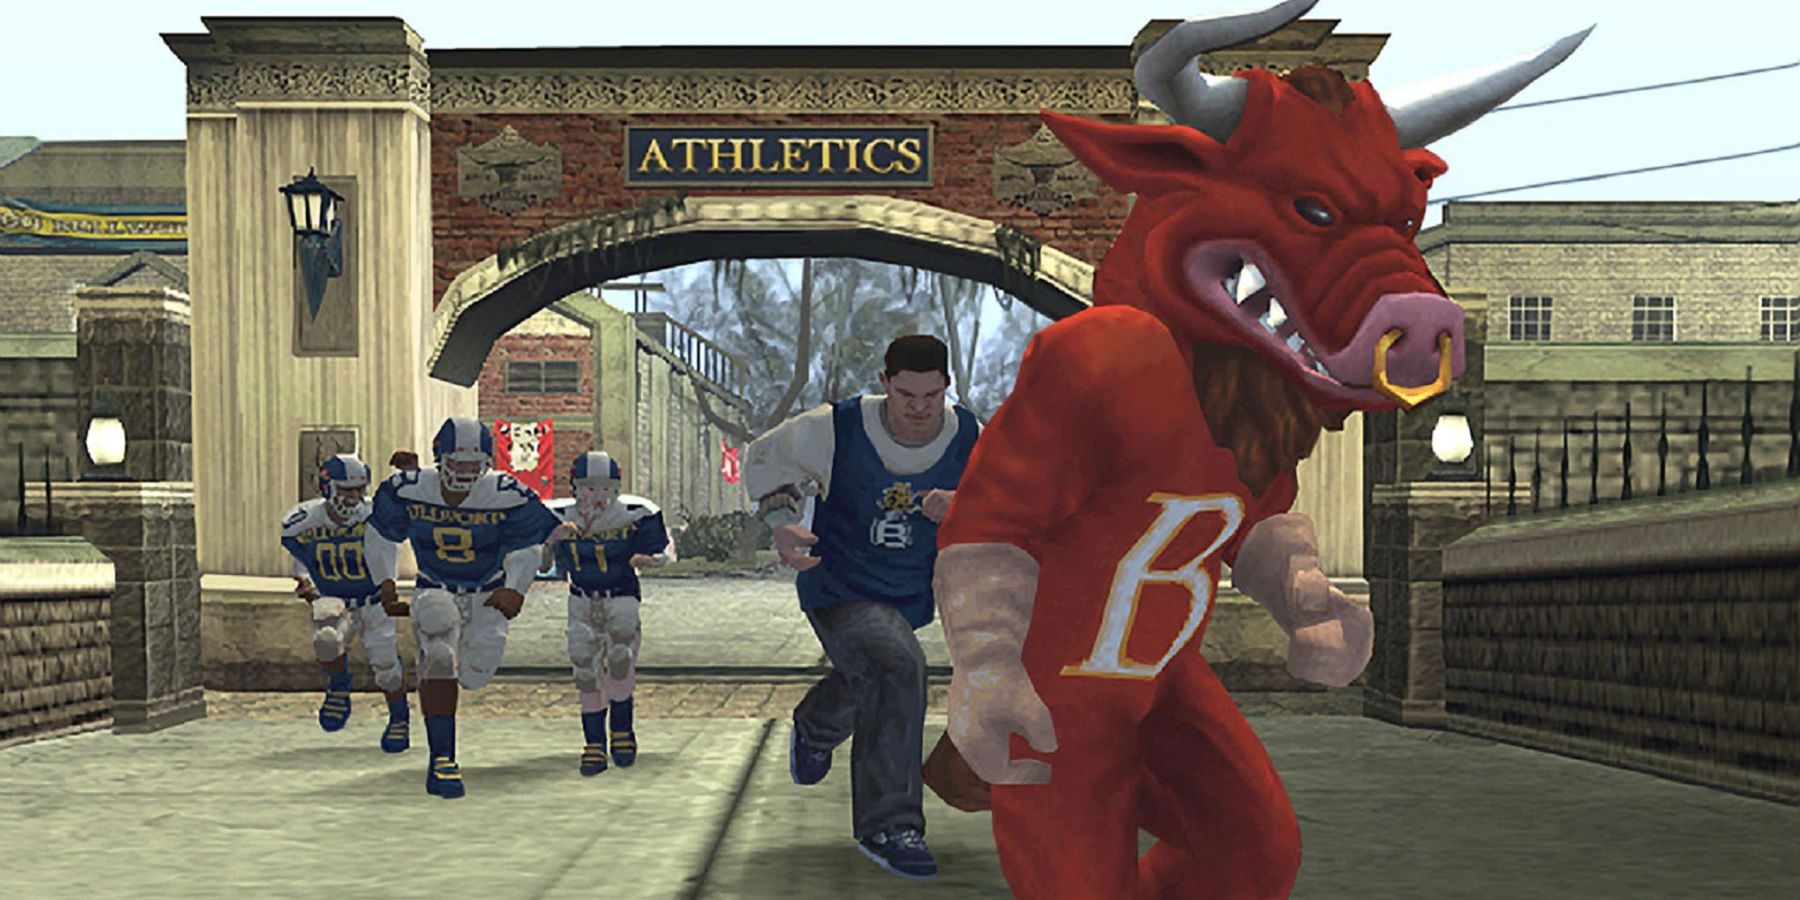 bully jocks chasing mascot